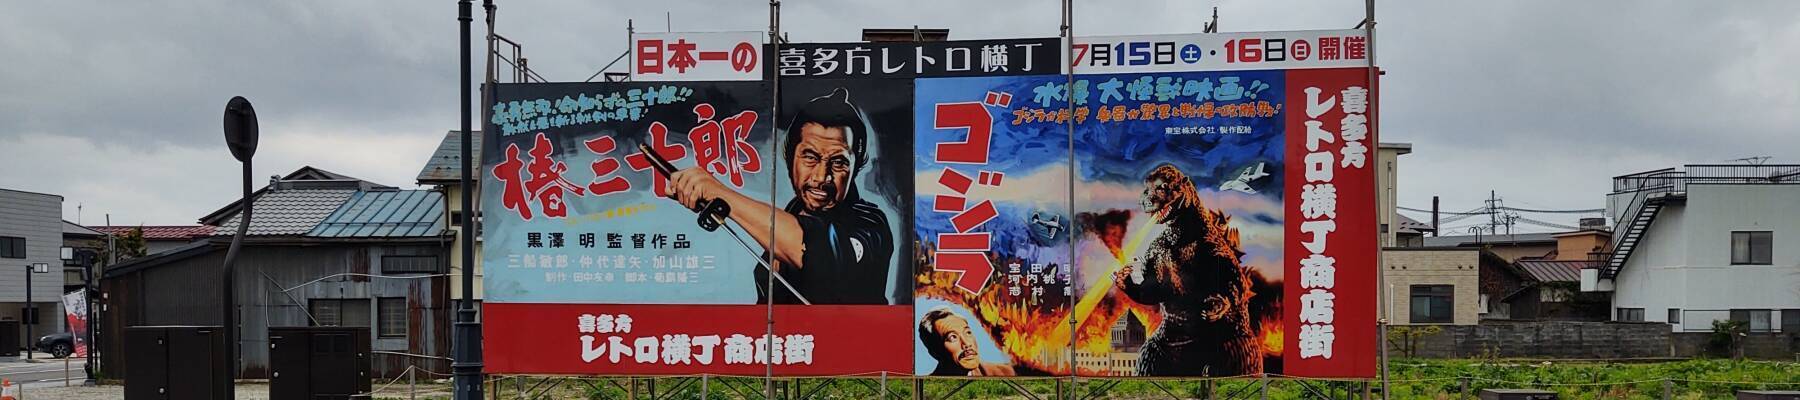 Billboard promoting 'Sanjuro' by Akira Kurosawa with Mifune Toshiro and 'Gojira' in Kitakata.